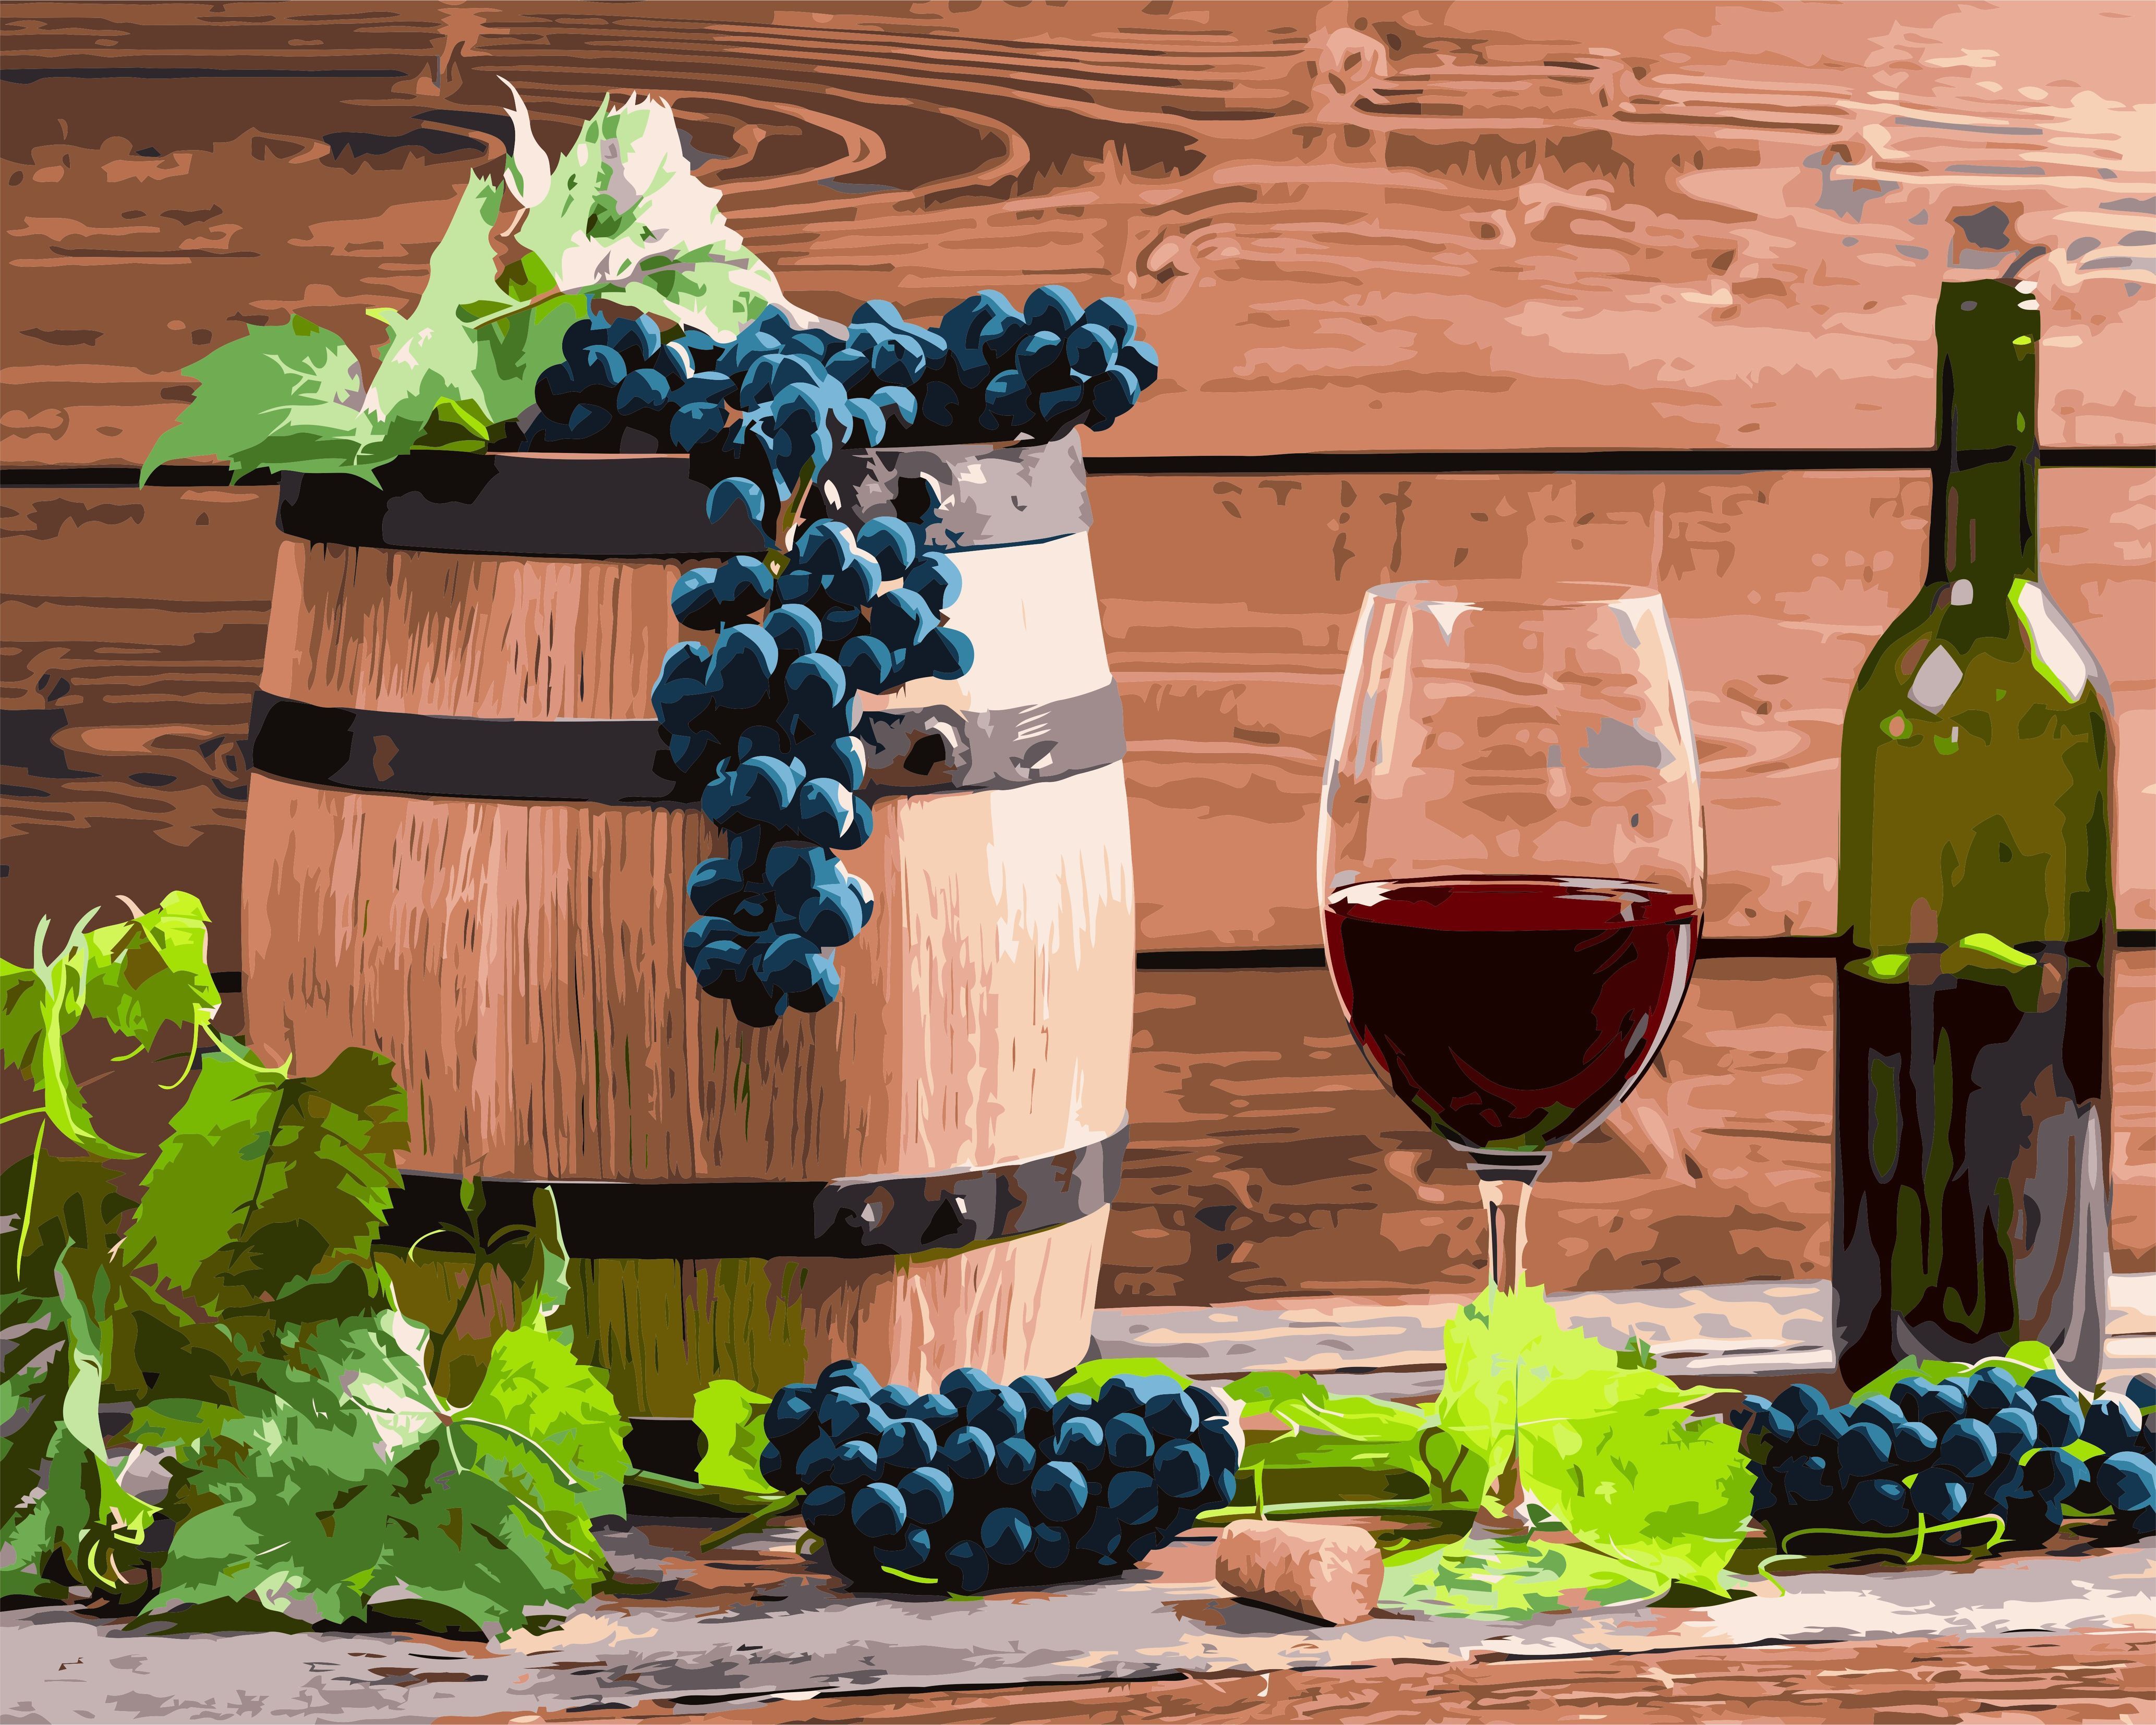 Виноград вино 7 букв. Кахетия виноград. Бочка с виноградом. Виноградная лоза. Винный бочонок.